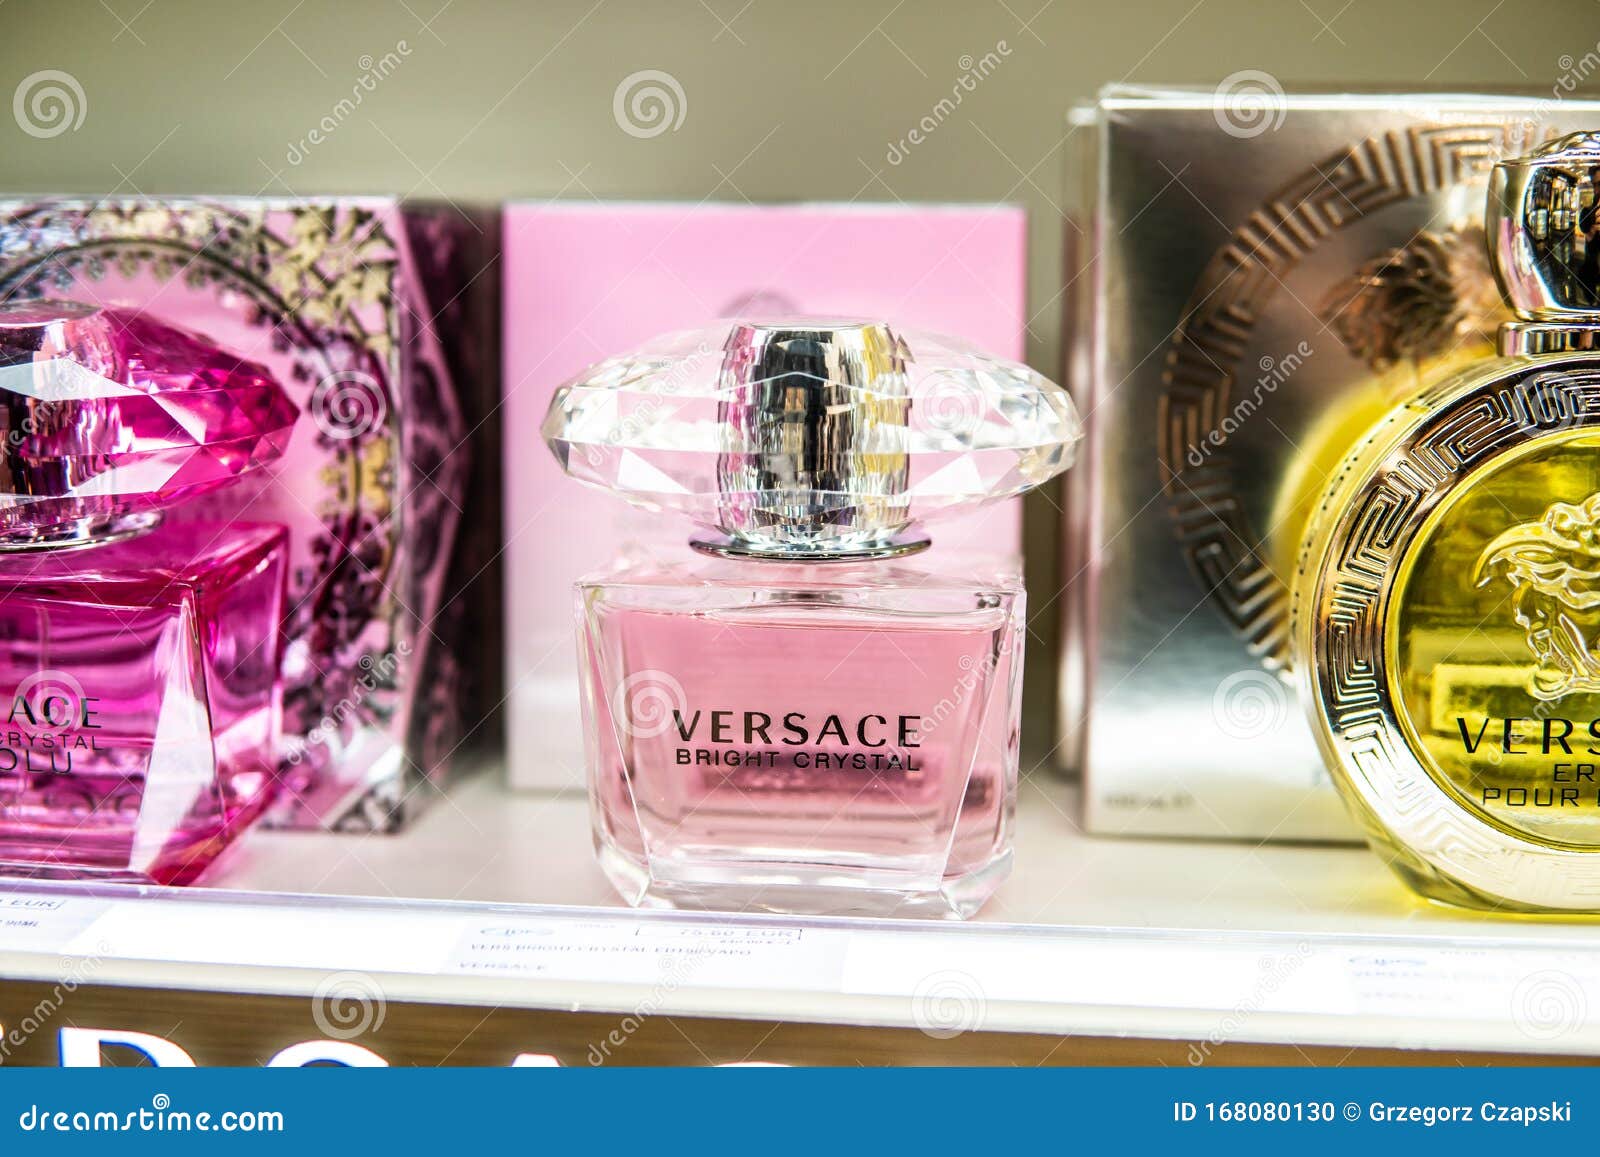 versace dark pink perfume